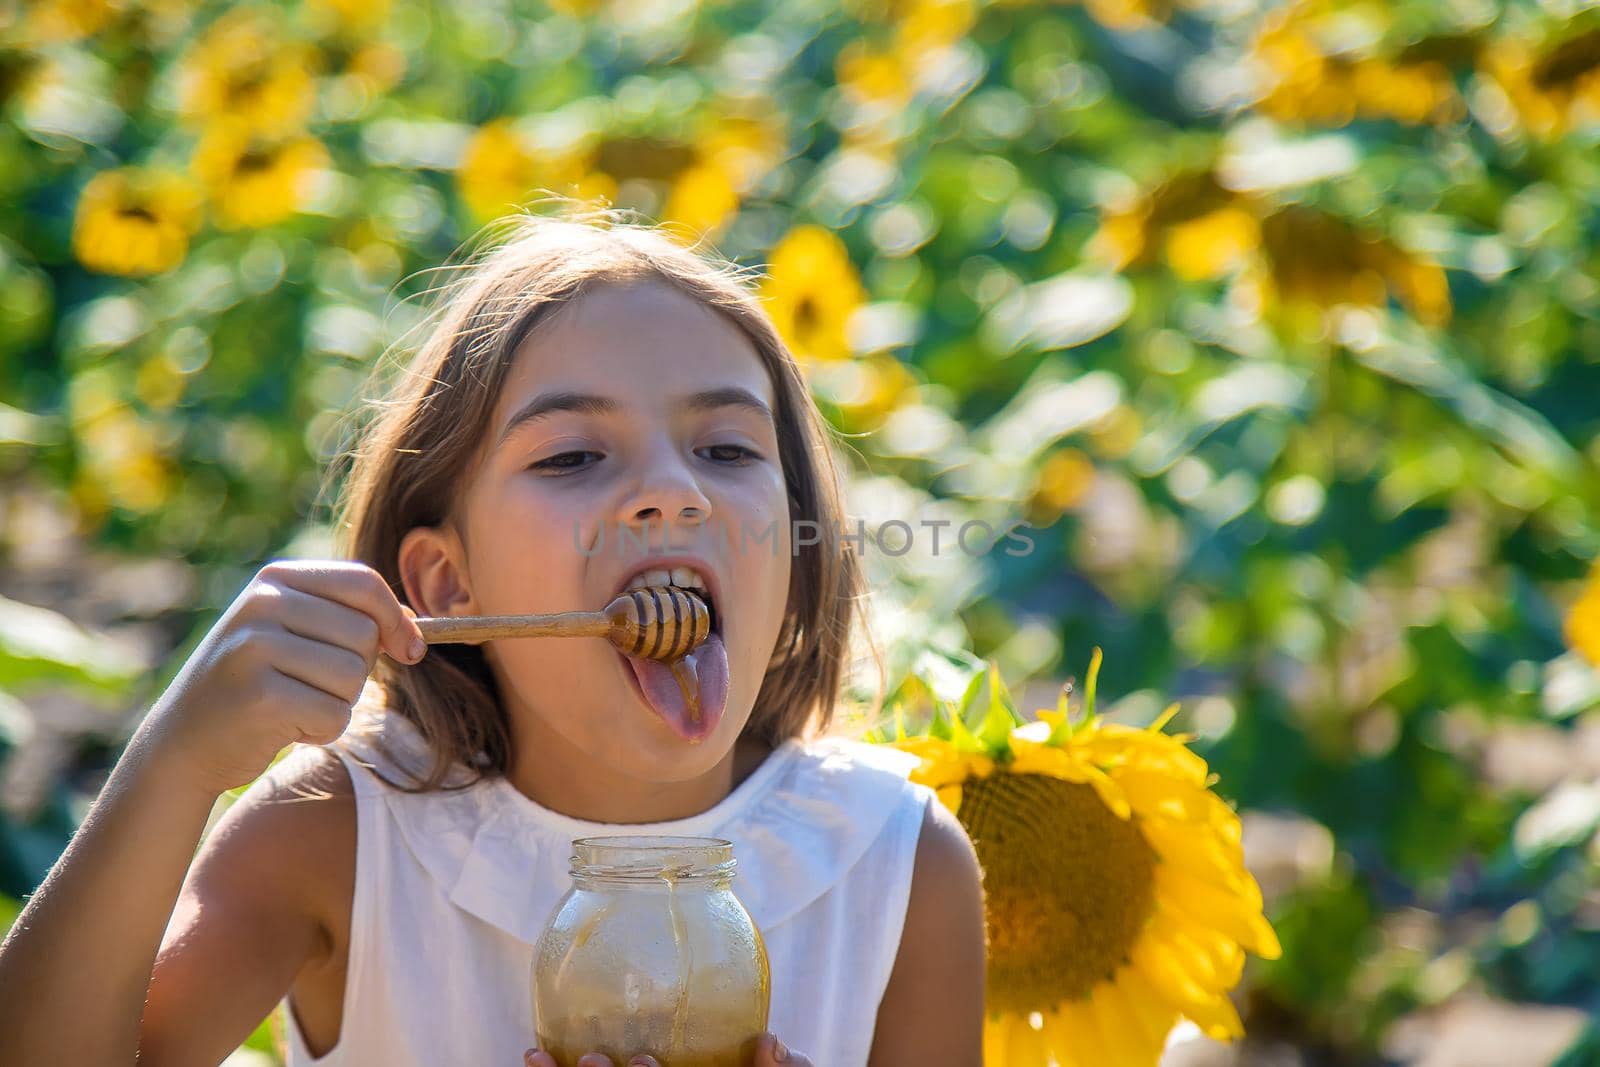 The child eats flower honey. Selective focus. Nature.